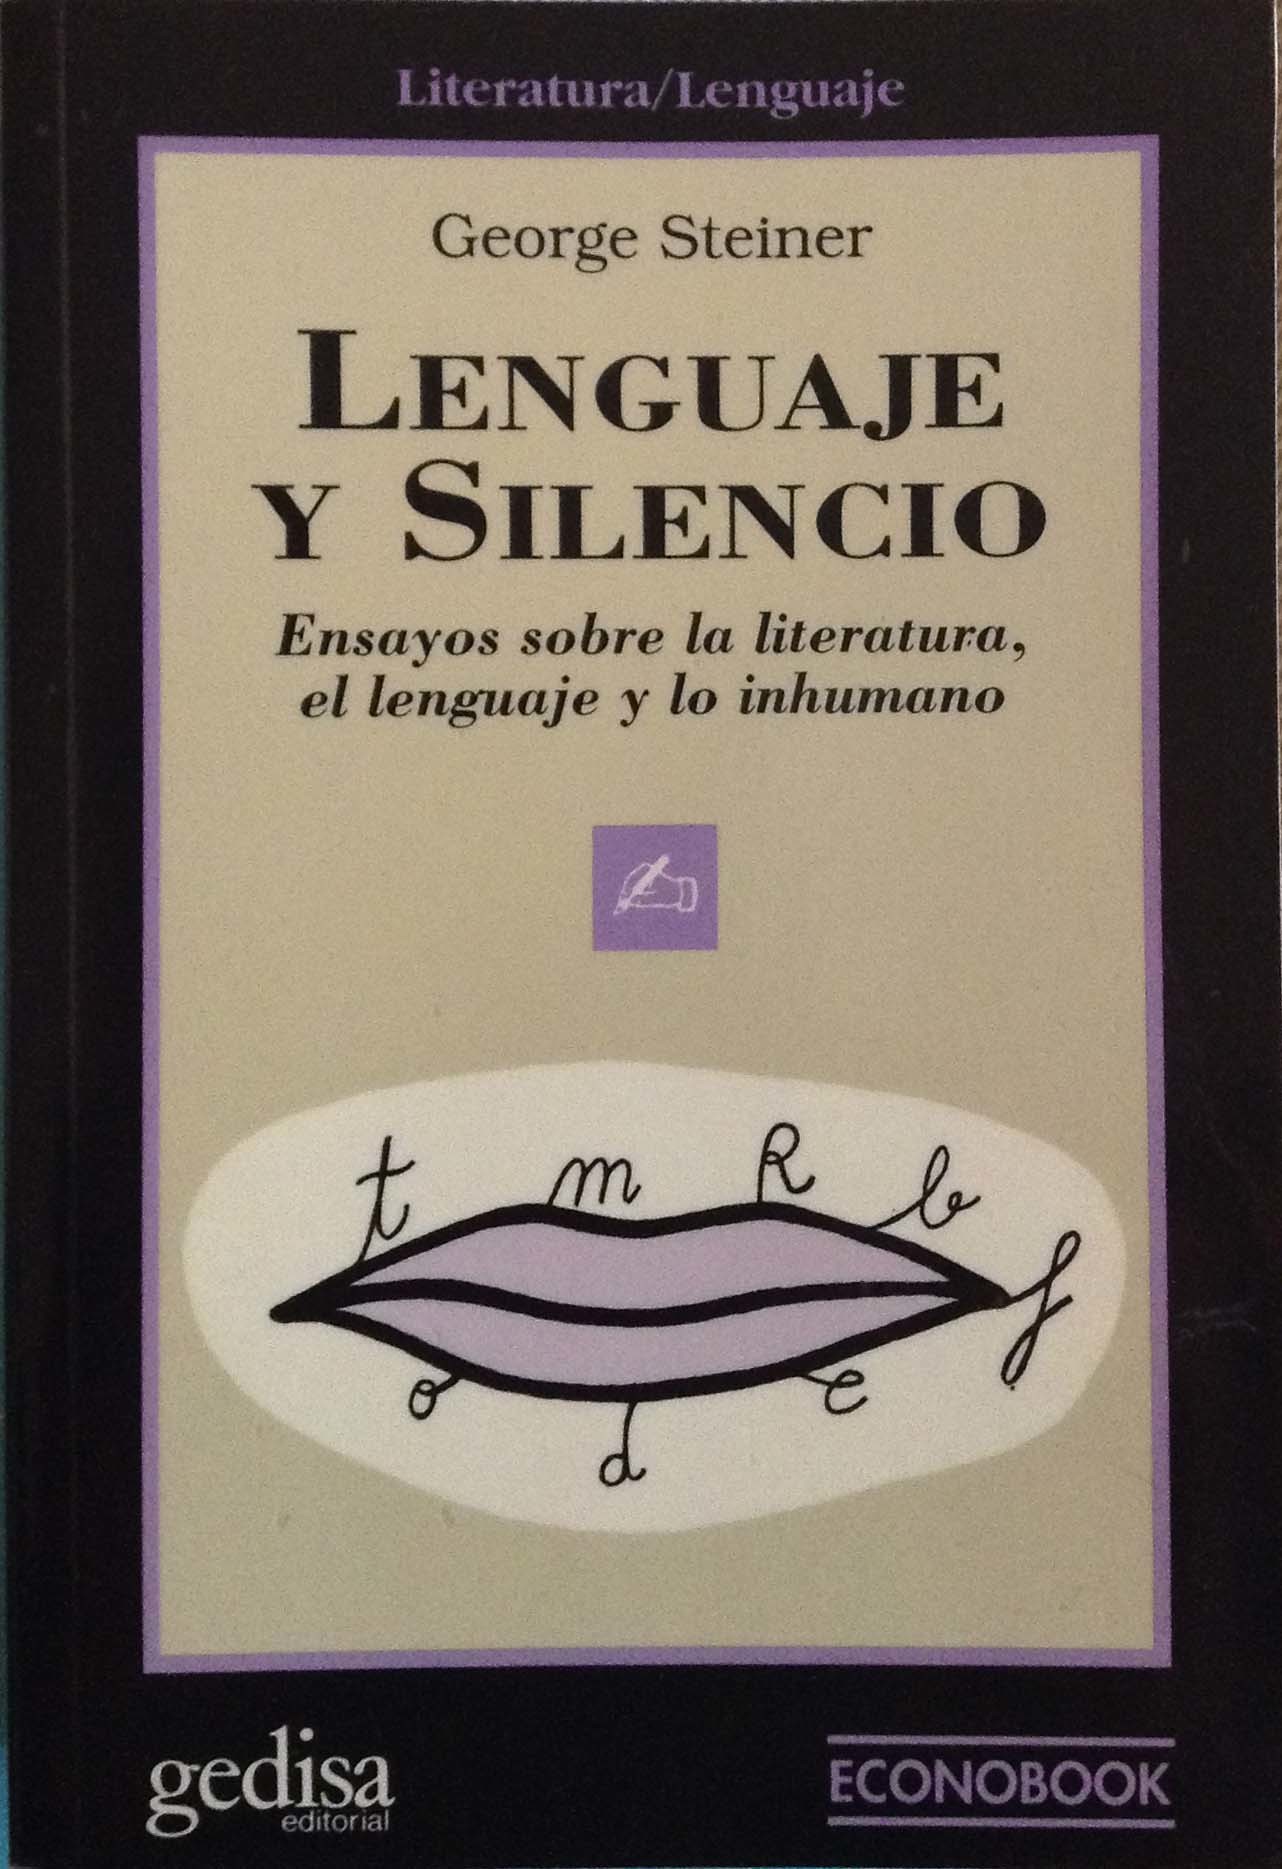 George Steiner: Lenguaje y Silencio (Spanish language, 1997, Gedisa Editorial)